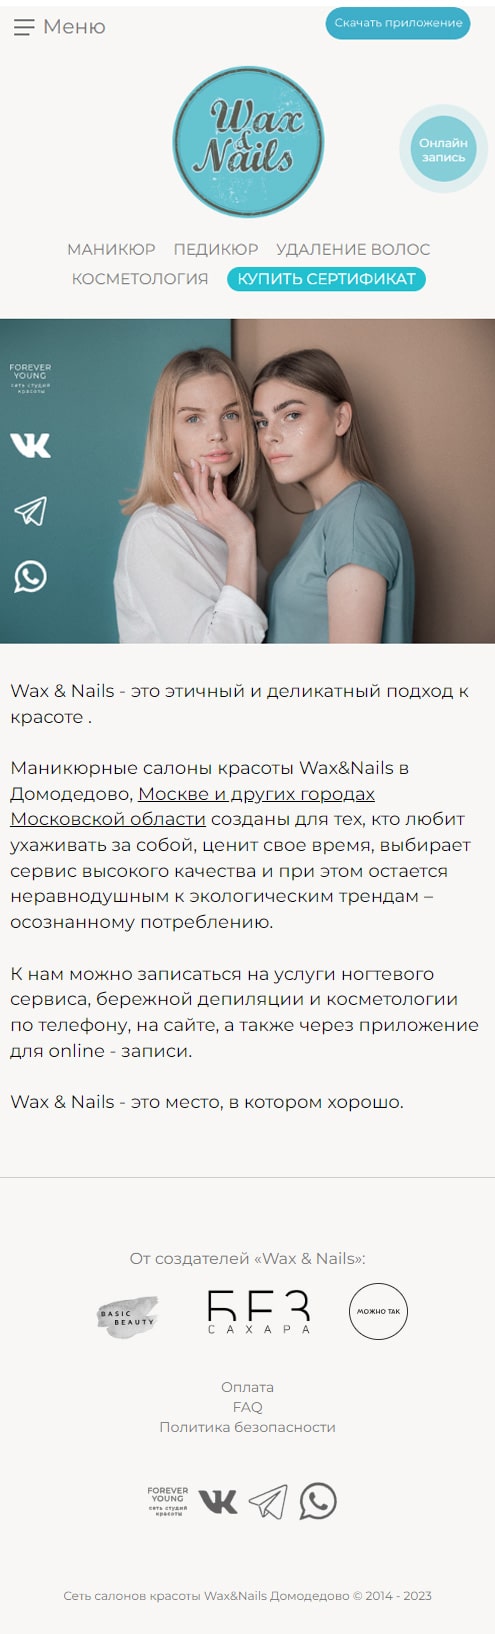 Разработка сайта салона красоты «Wax and Nails»